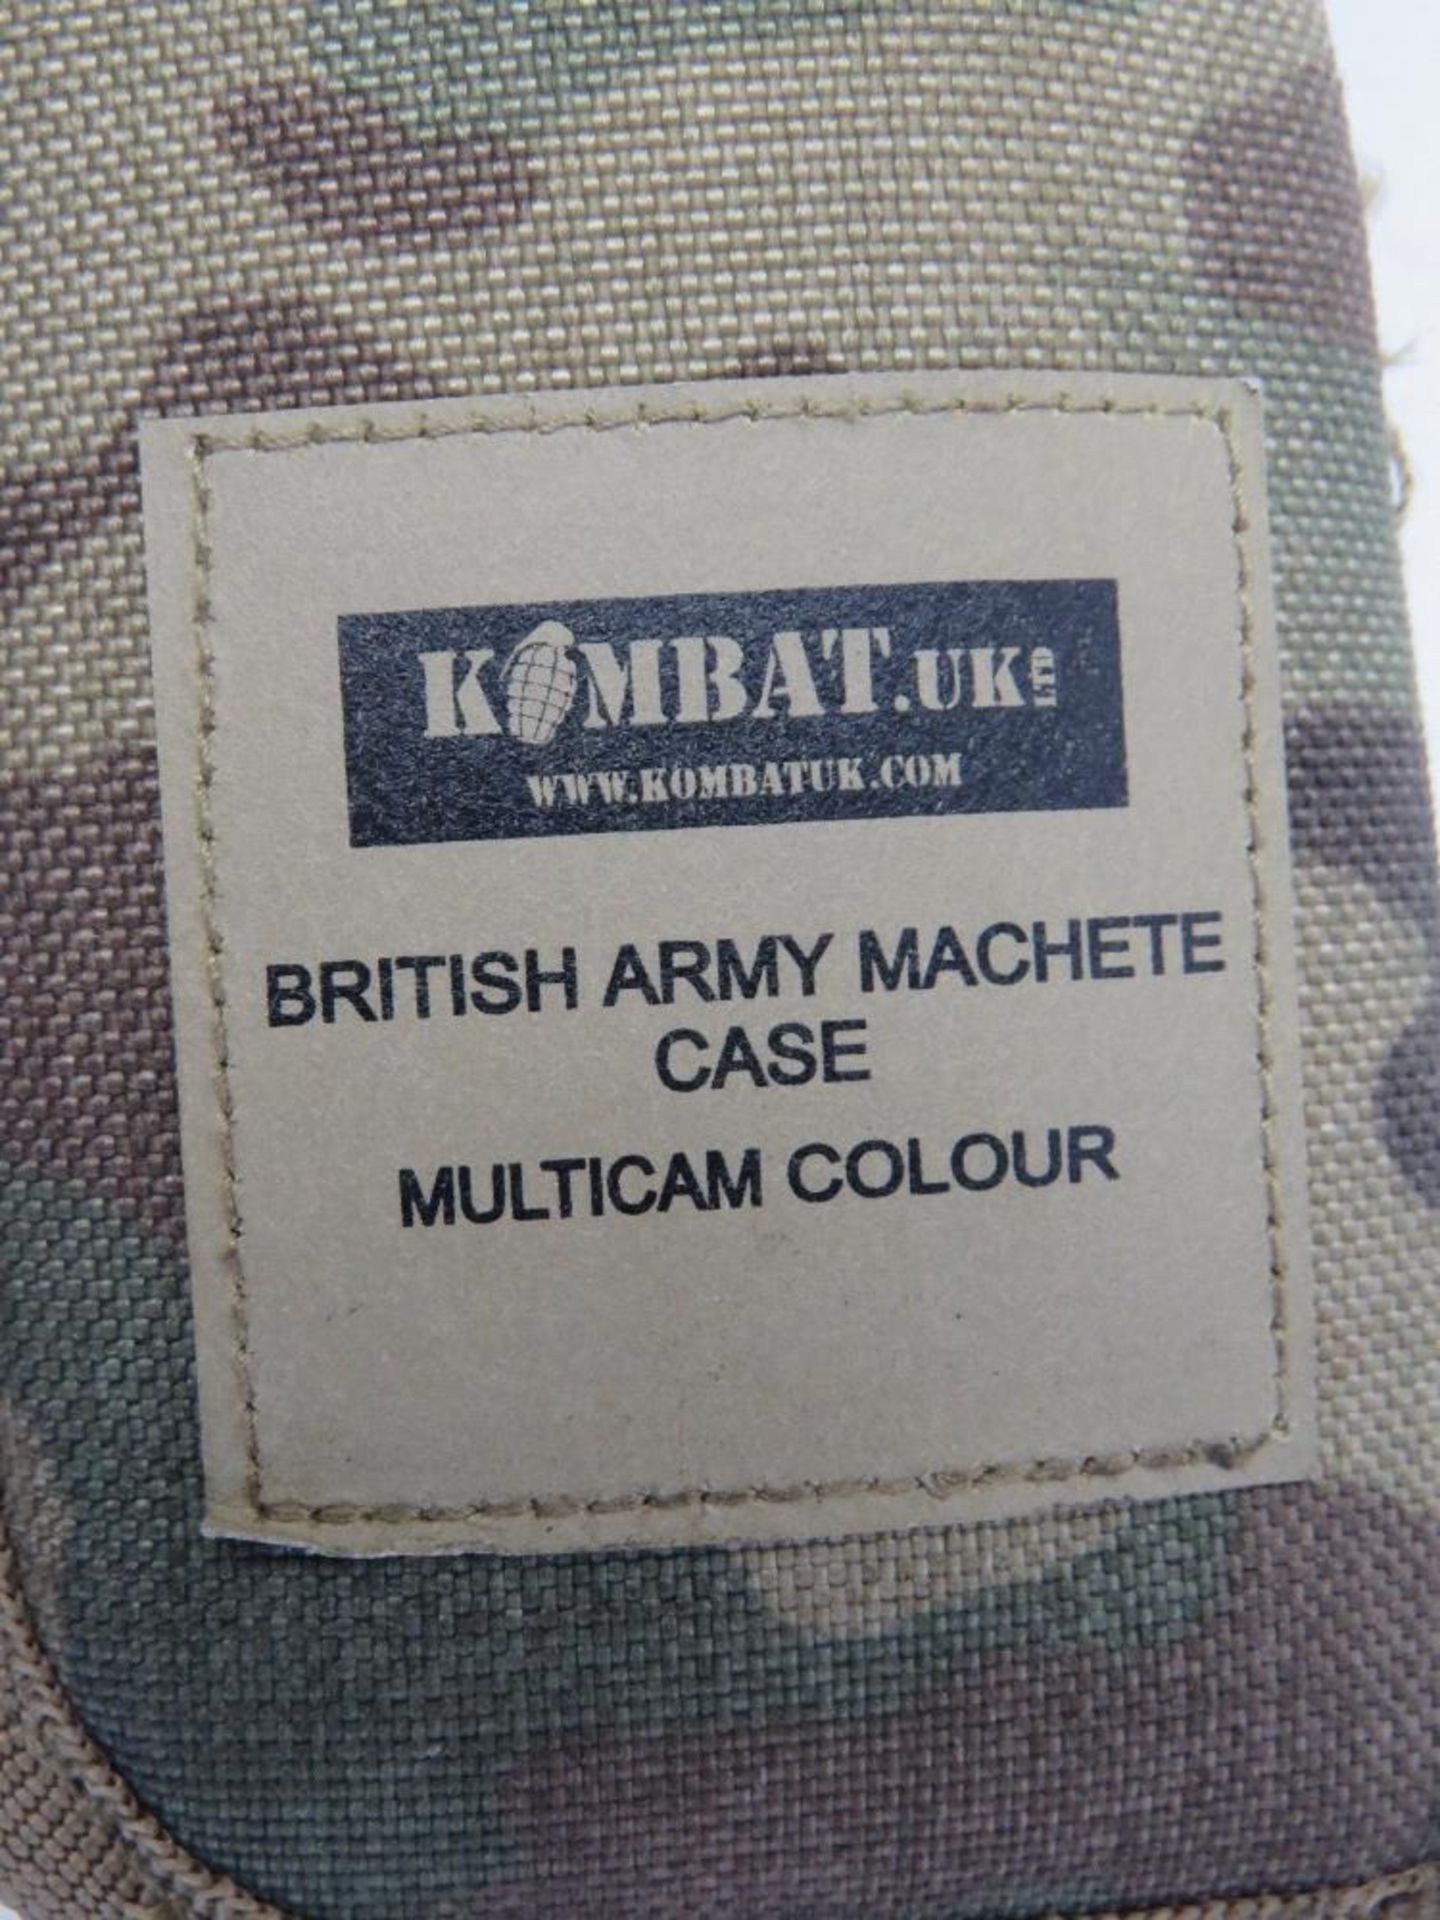 Three Kombat Tactical Machete with MTP sheath. - Image 2 of 2